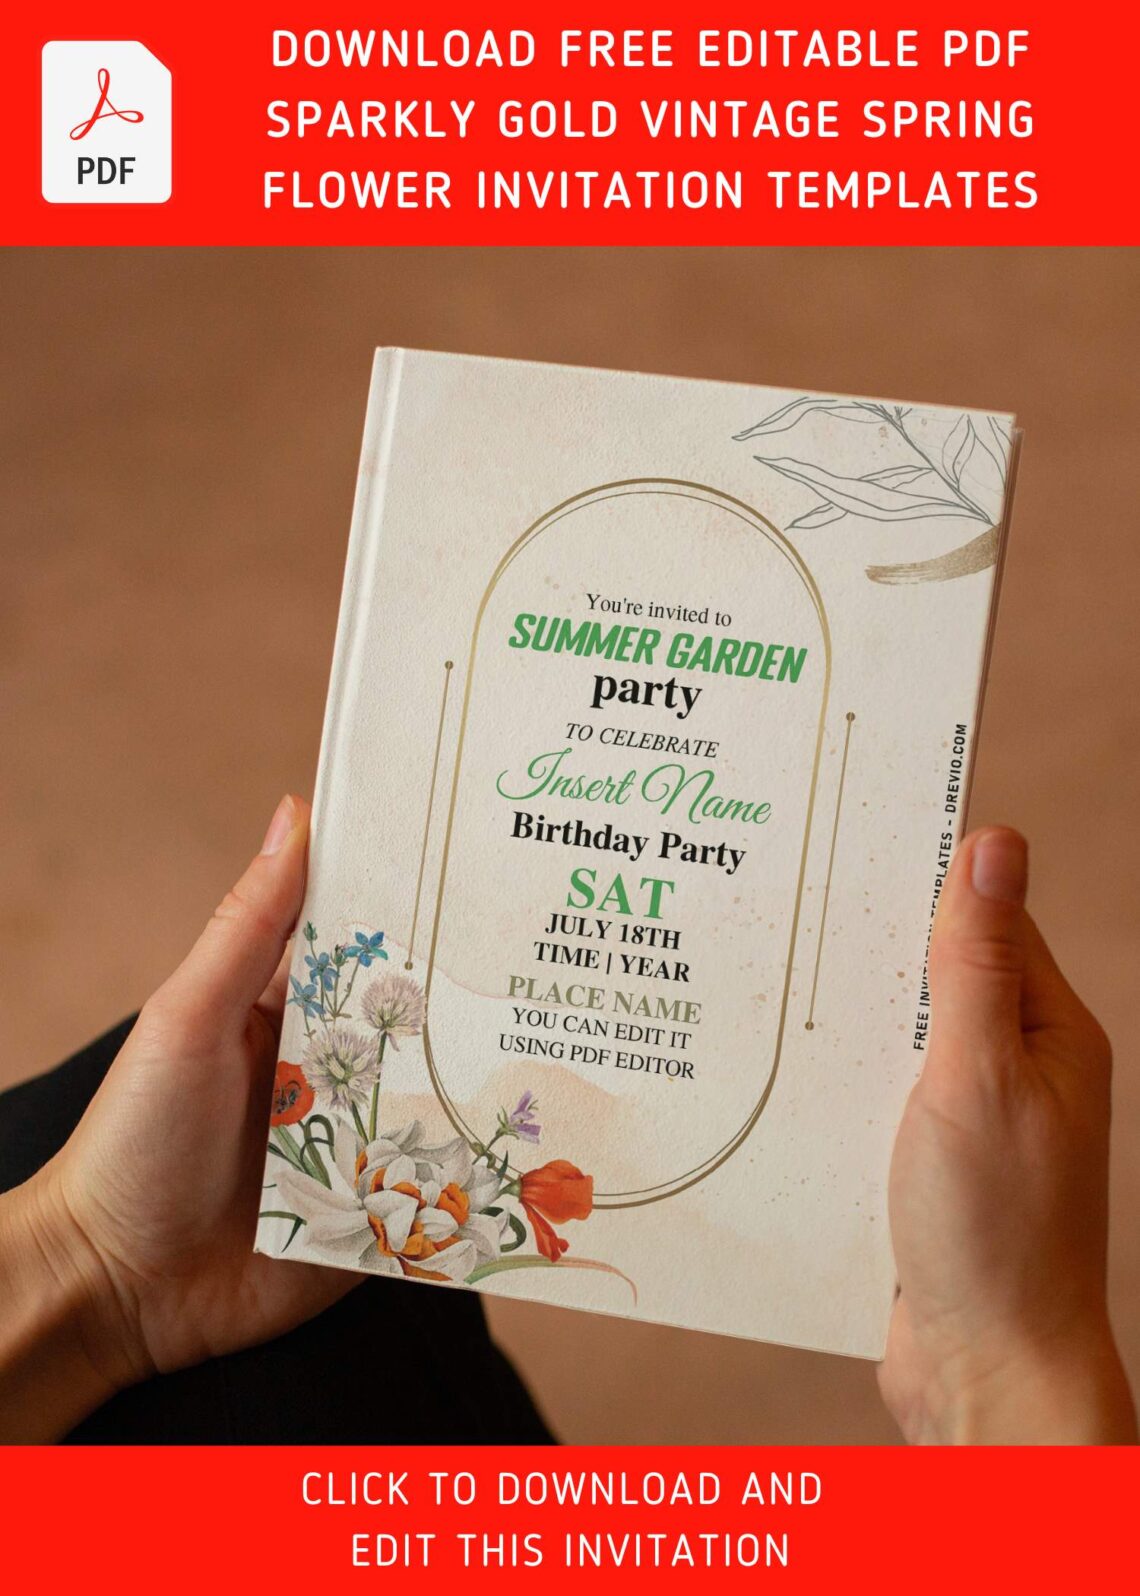 (Free Editable PDF) Stylish Gold Spring Floral Fiesta Birthday Invitation Templates with elegant script